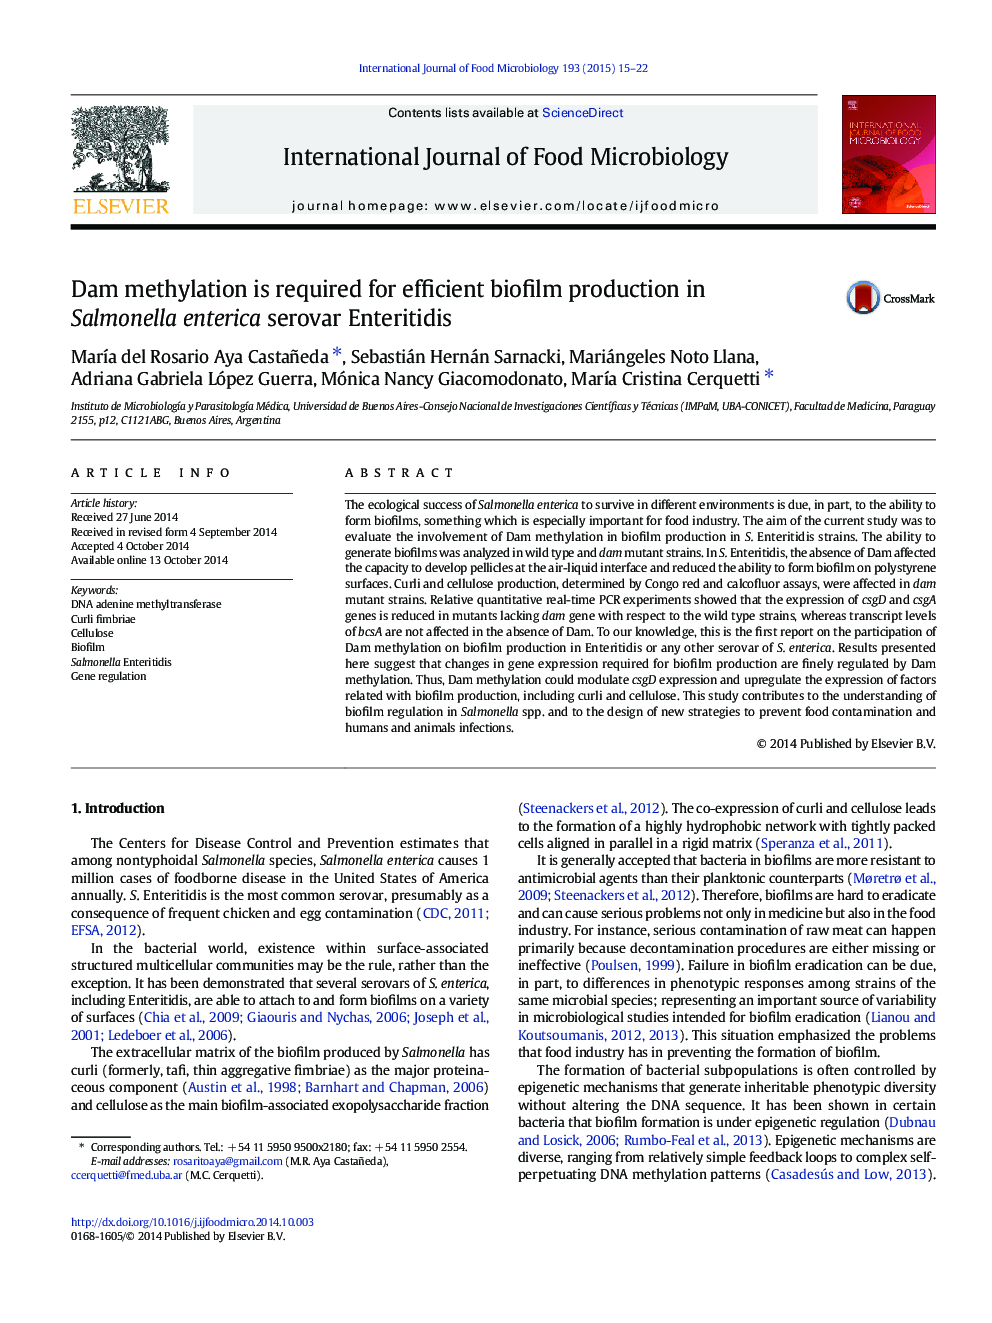 Dam methylation is required for efficient biofilm production in Salmonella enterica serovar Enteritidis